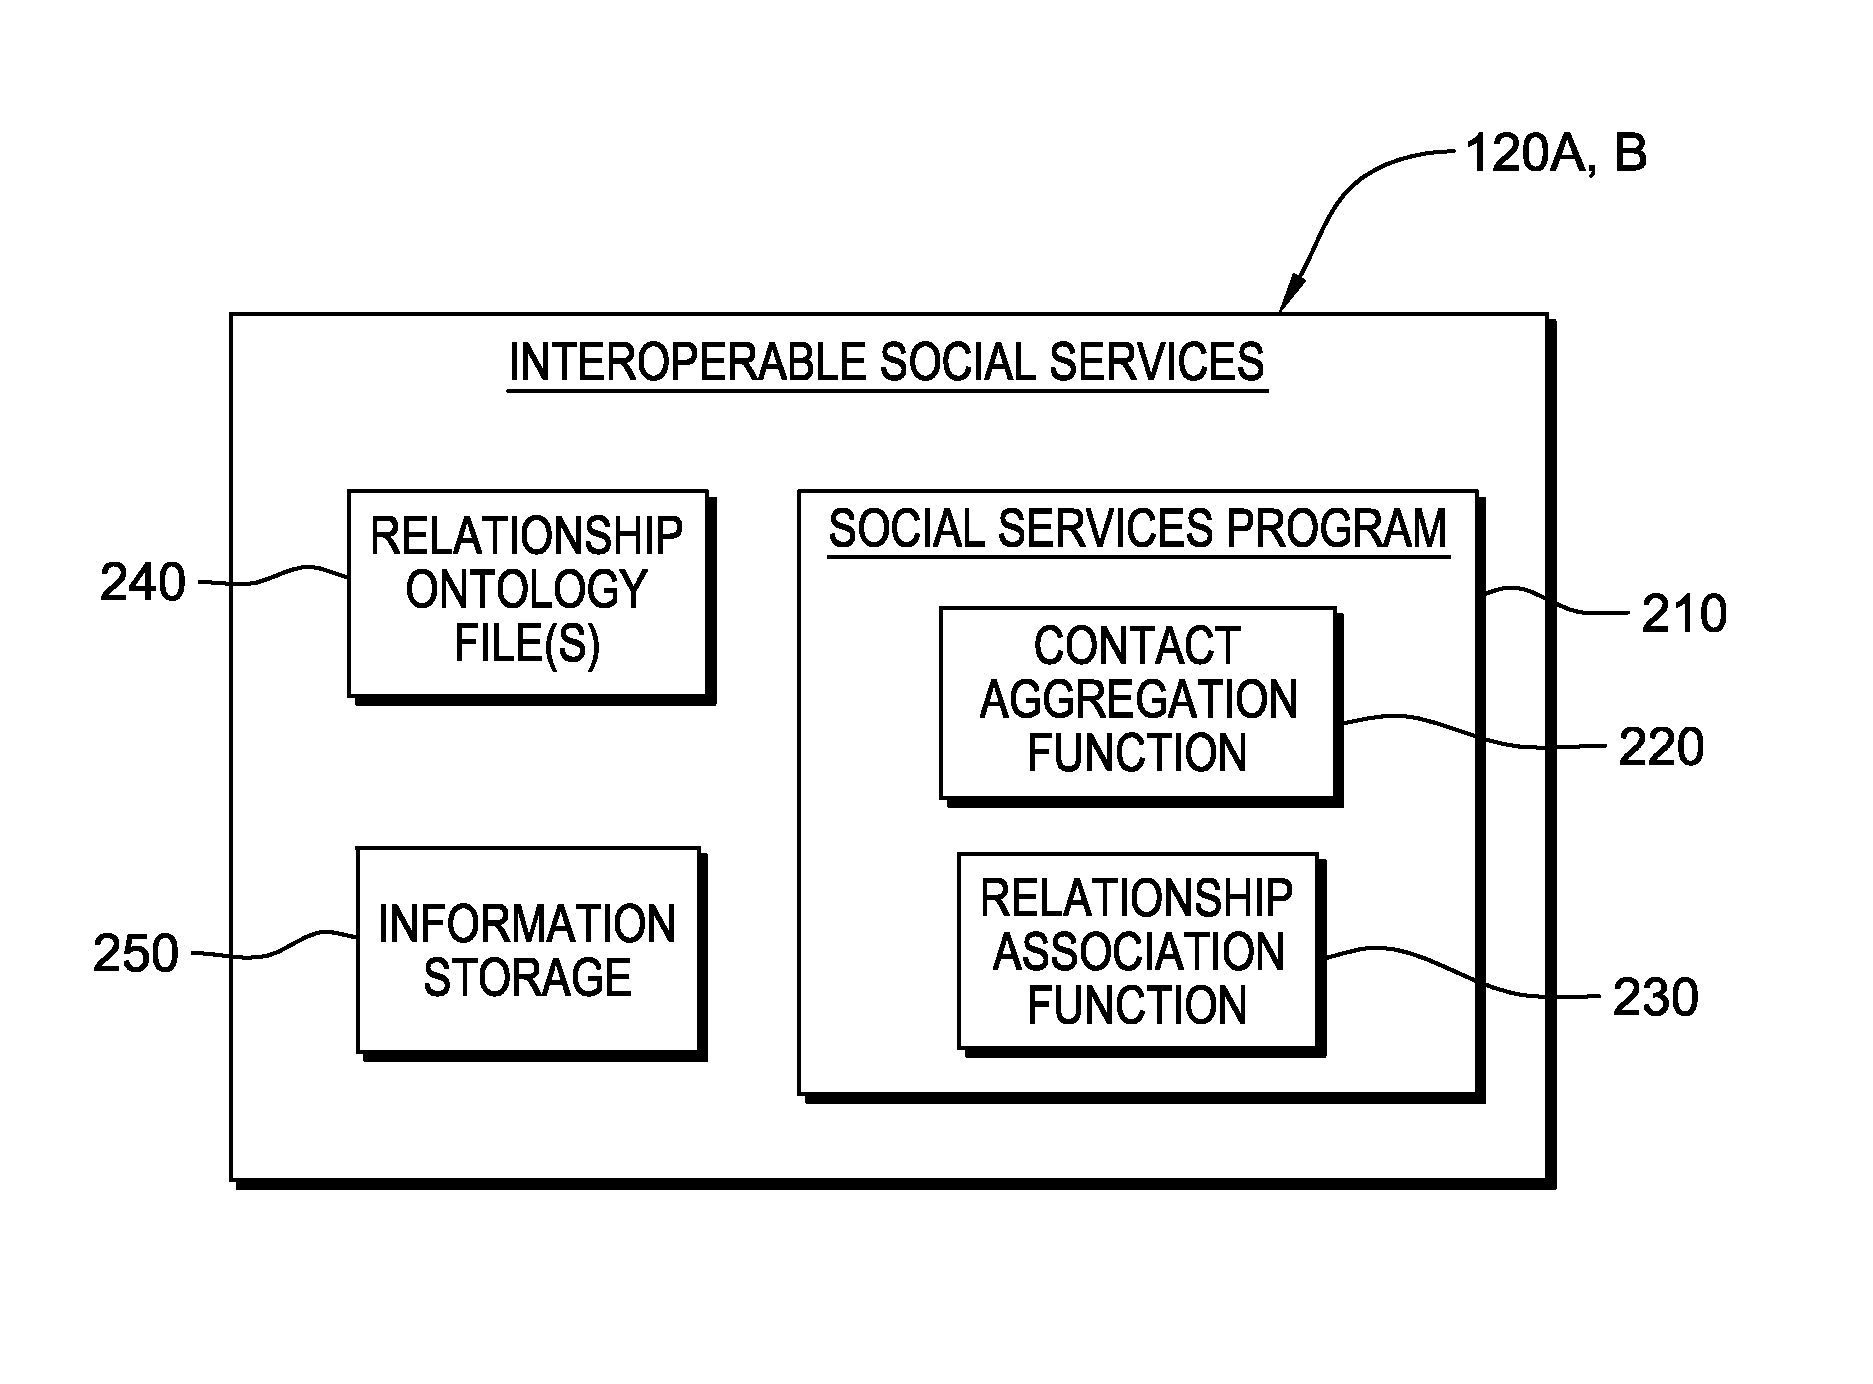 Interoperable social services